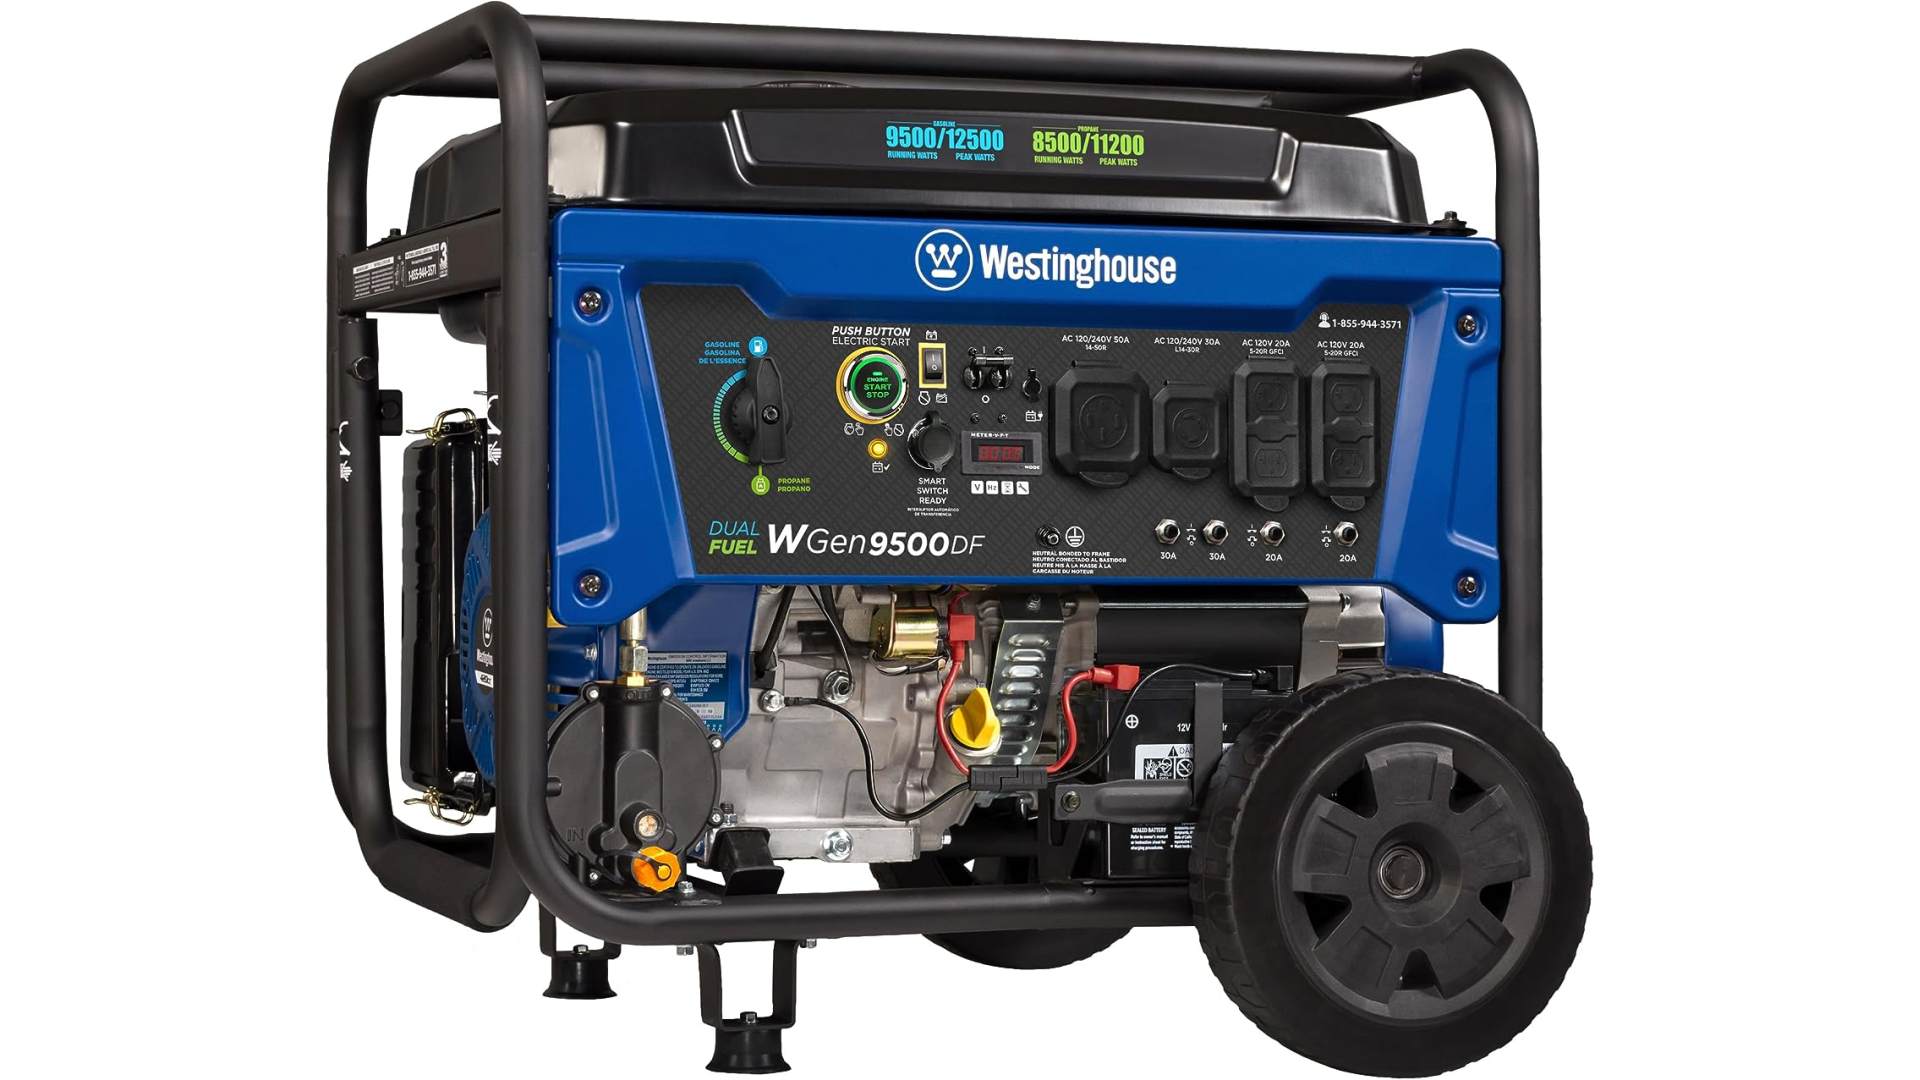 Westinghouse WGen9500DF Dual Fuel Portable Generator Review